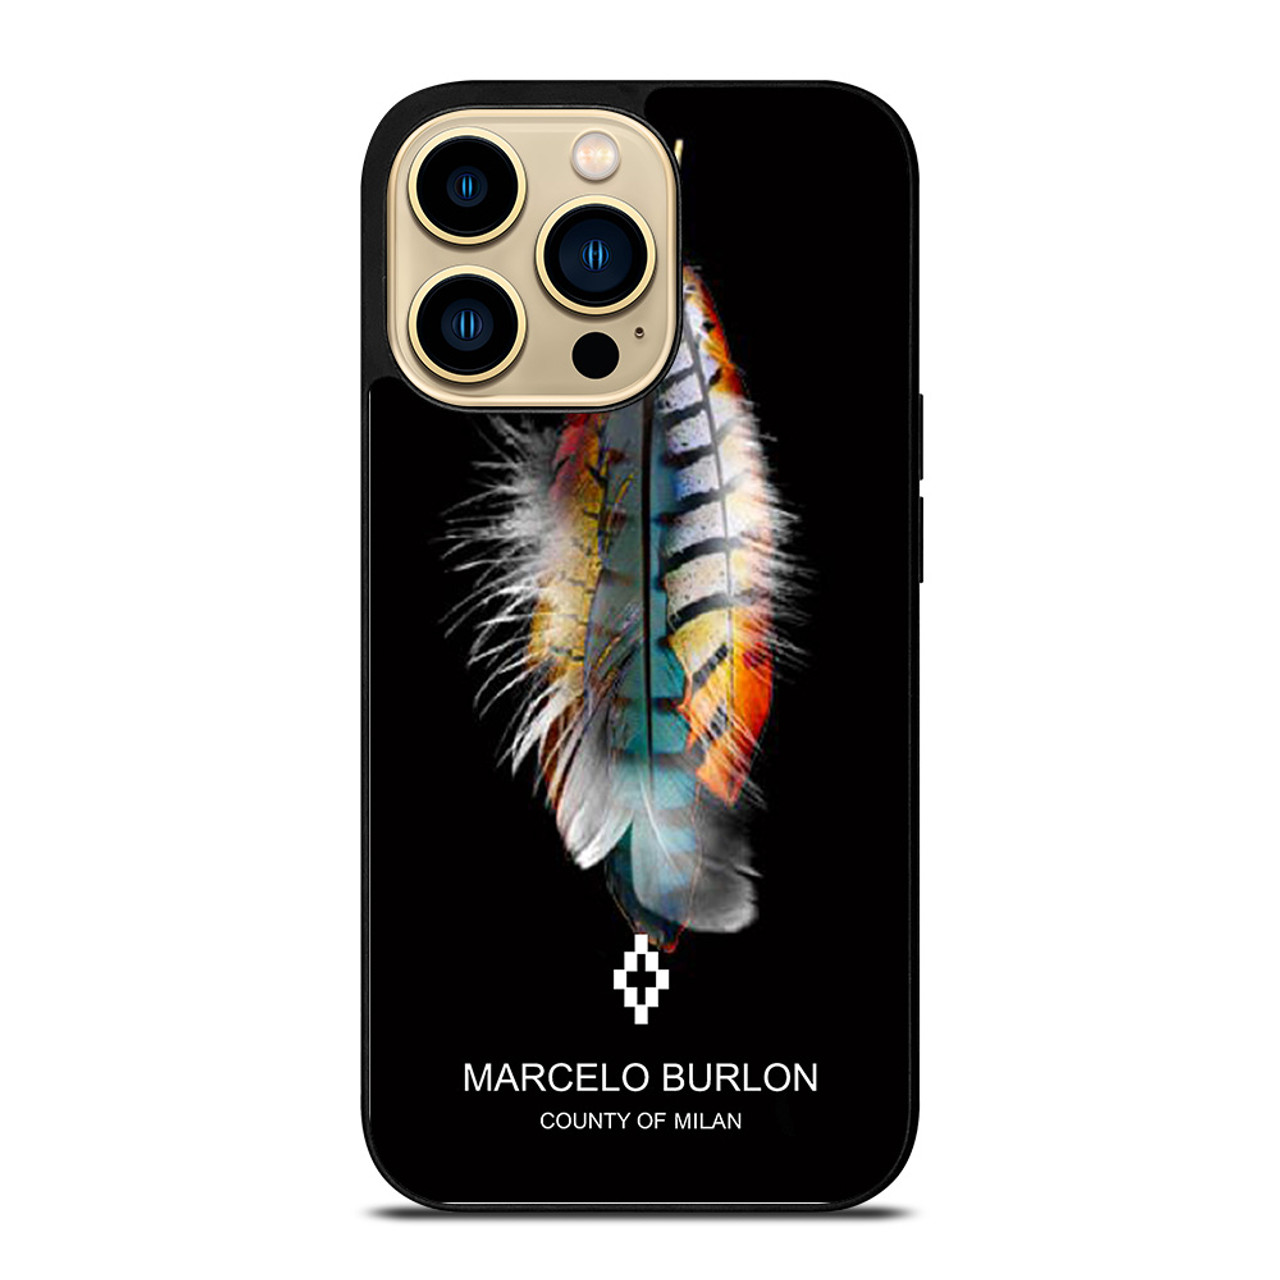 MARCELO BURLON iPhone Pro Case Cover